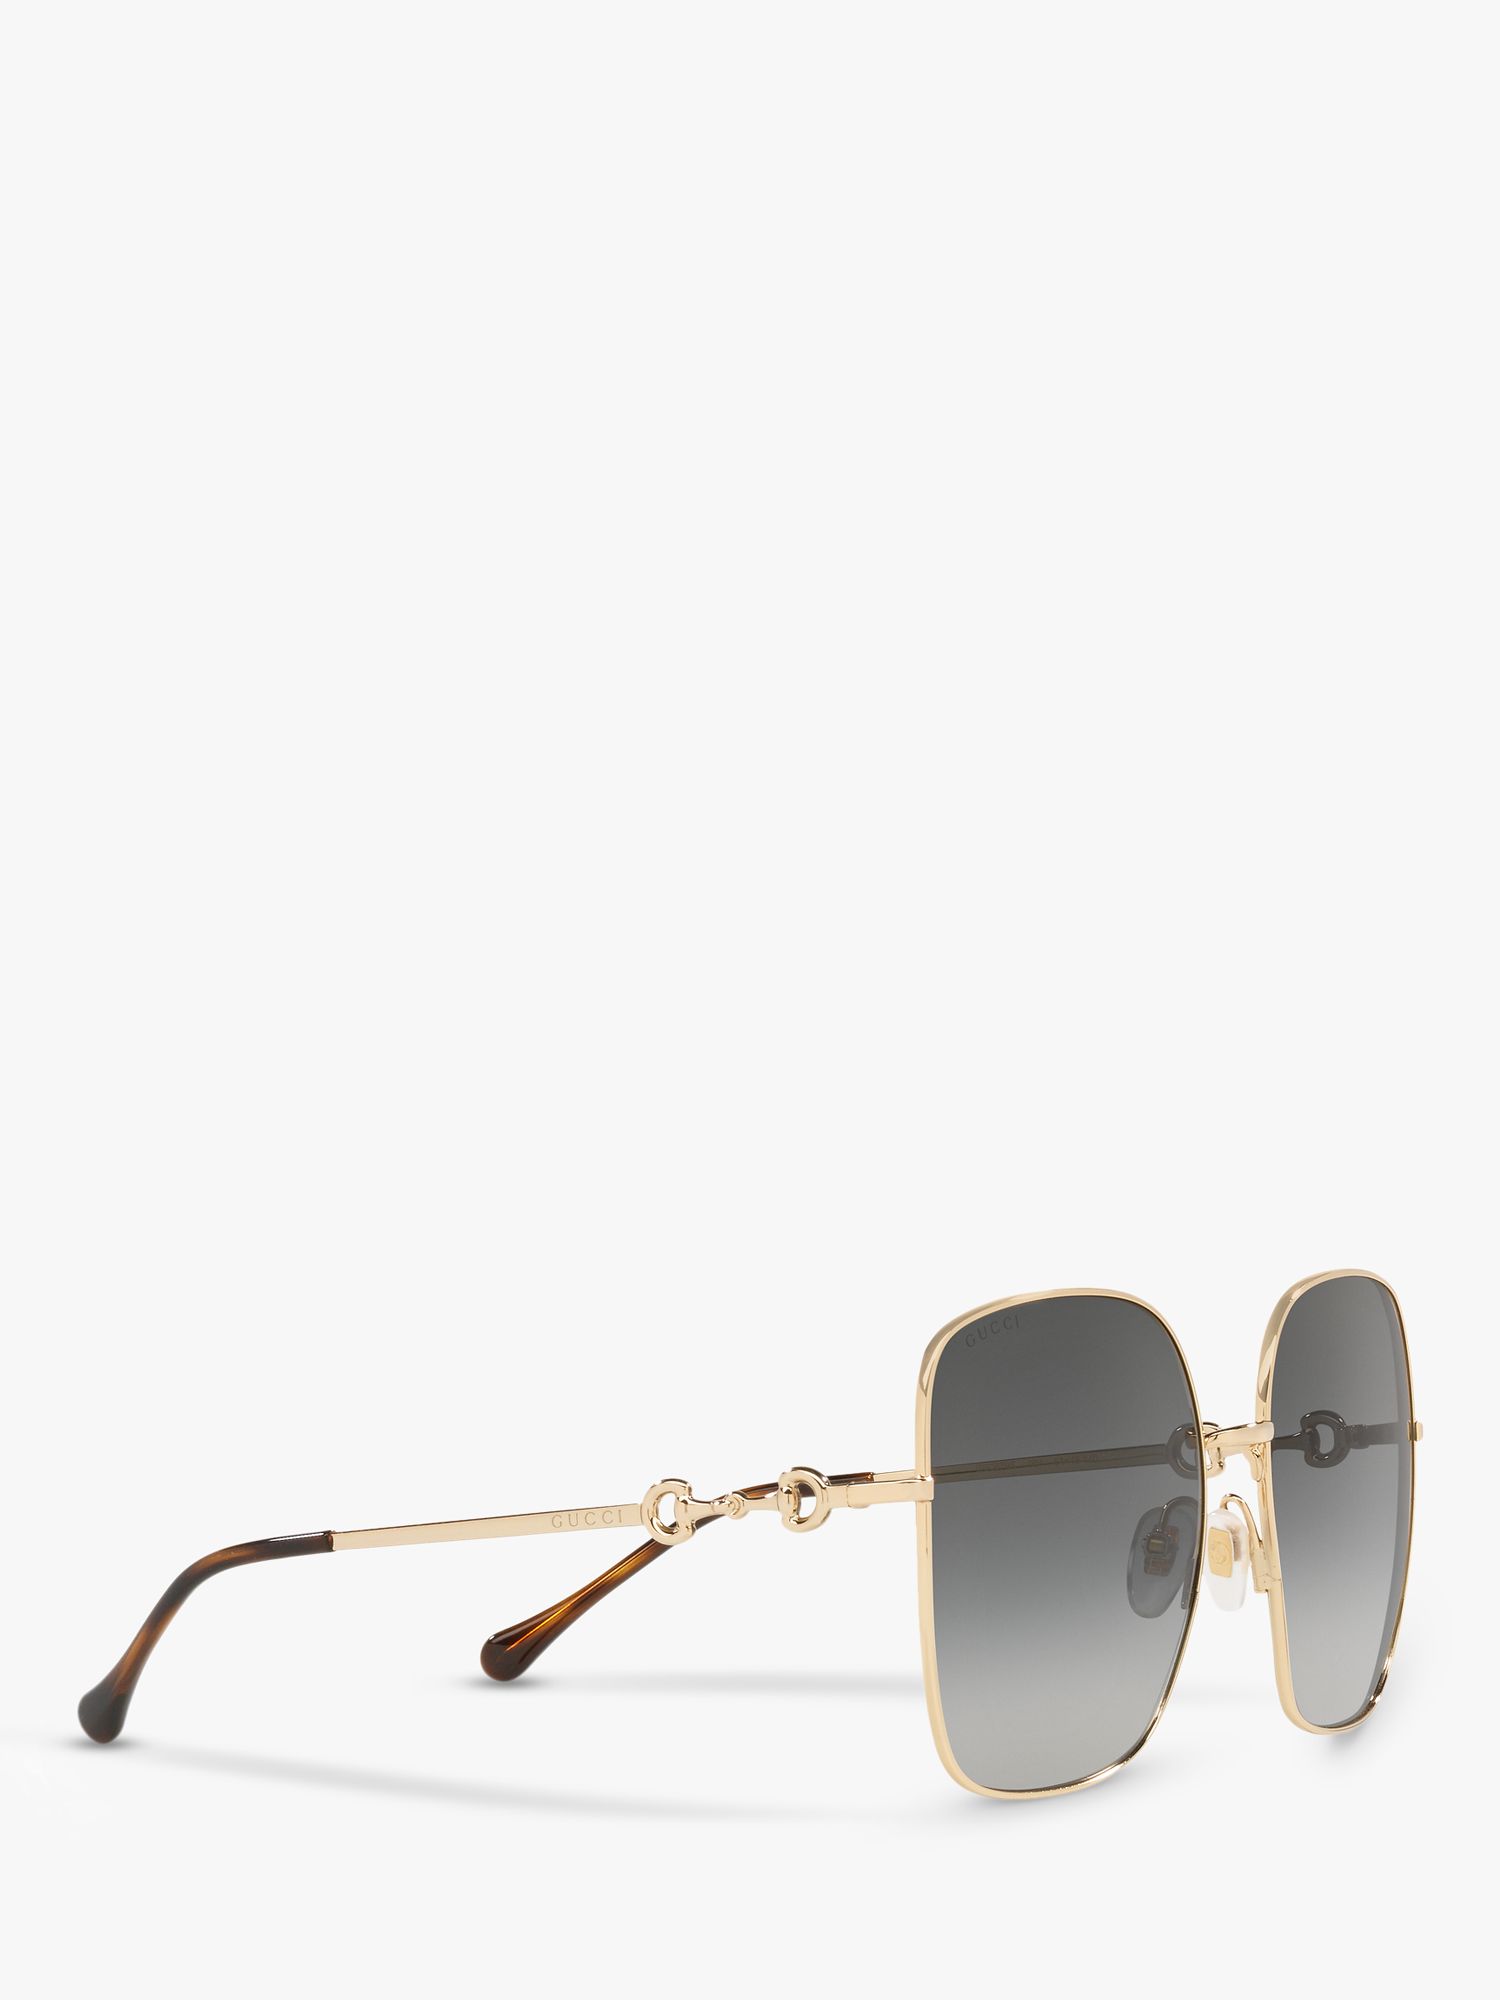 Gucci GG0879S Women's Square Sunglasses, Gold/Grey Gradient at John ...